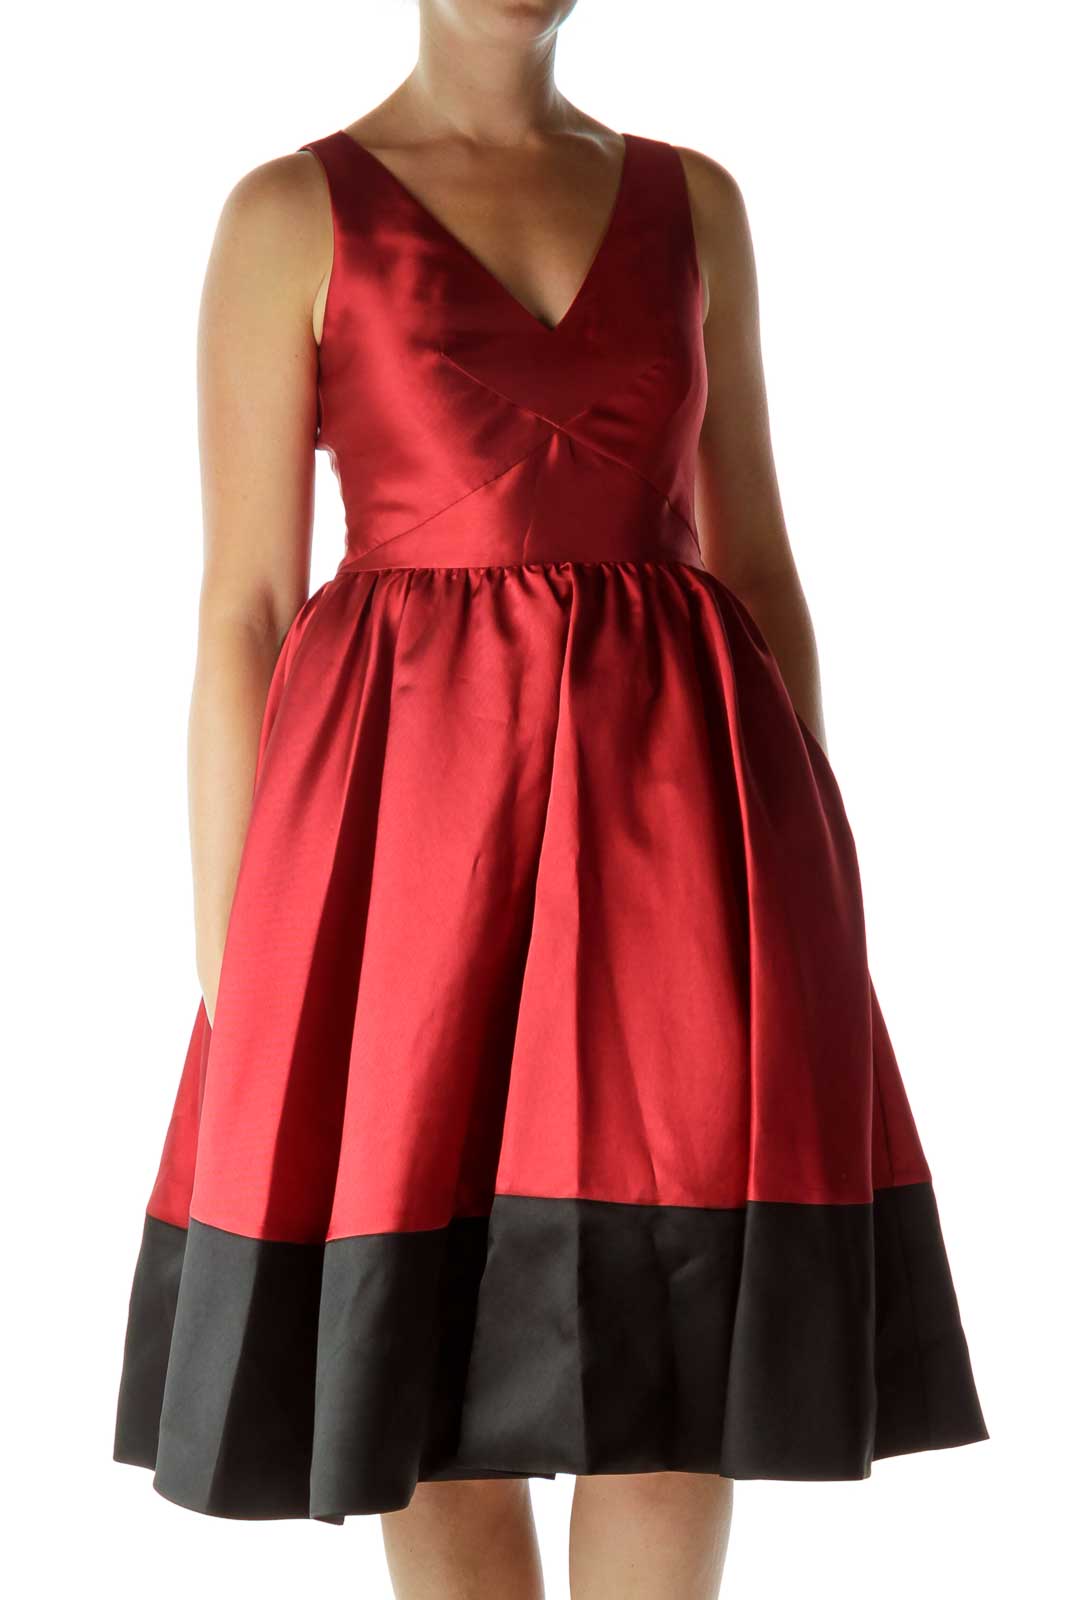 Red Black V-Neck Empire Waist Evening Dress Front